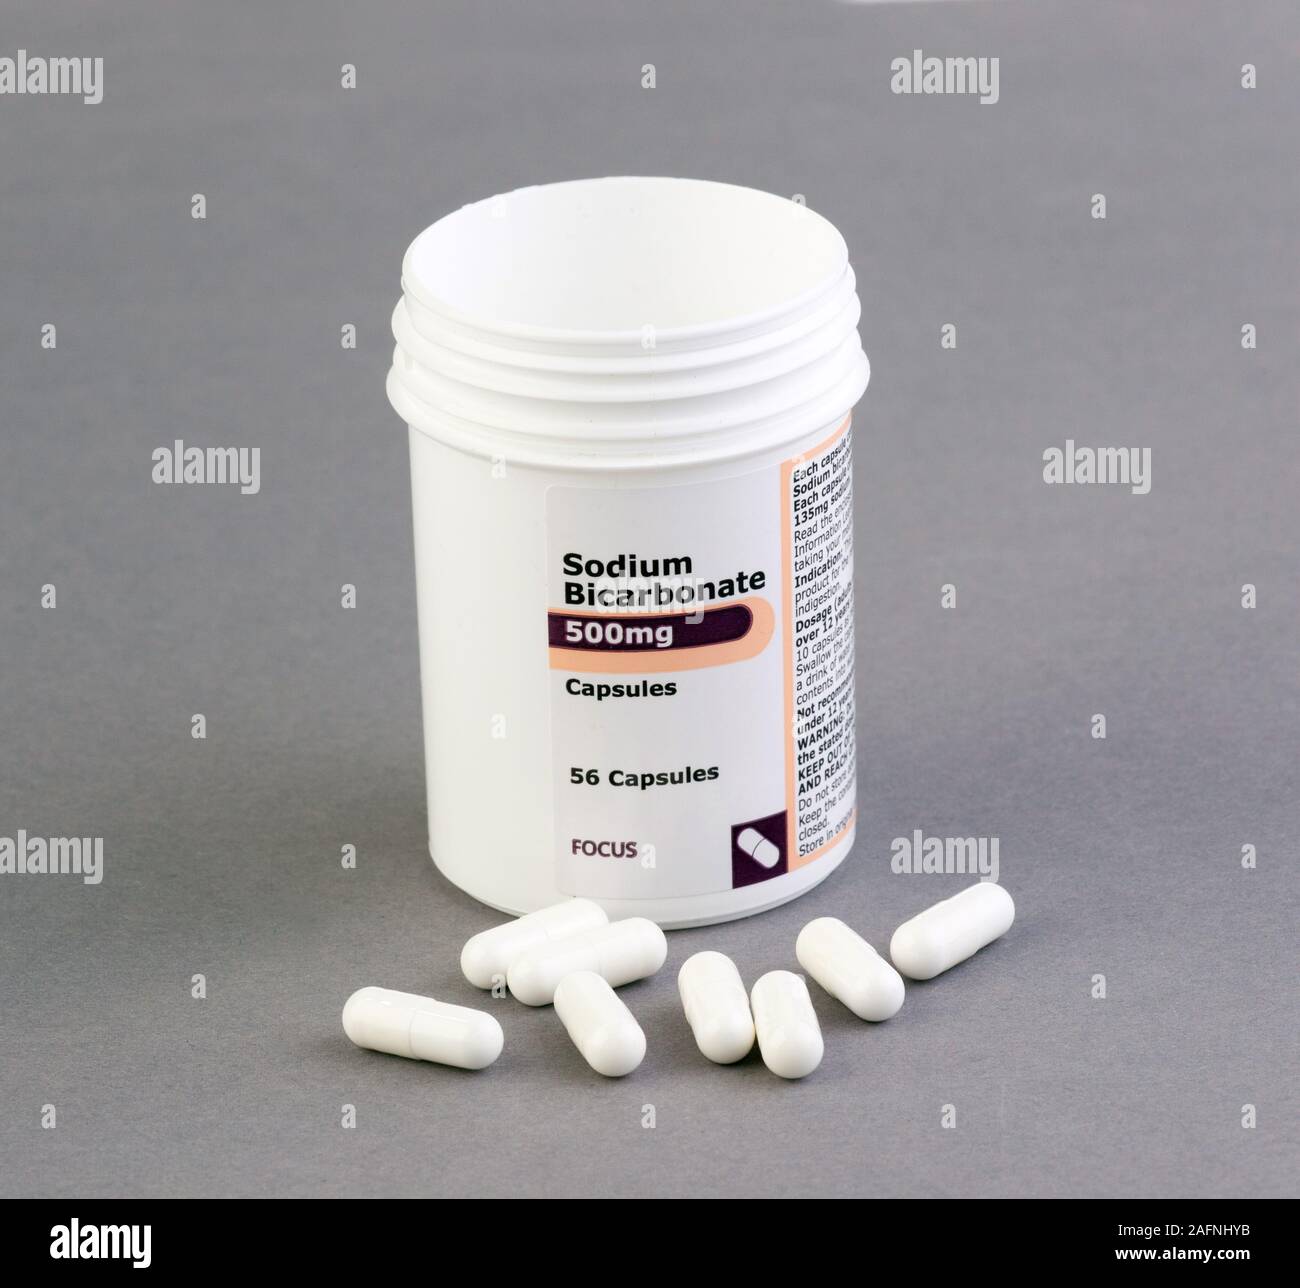 Sodium bicarbonate antacid capsules / tablets Stock Photo